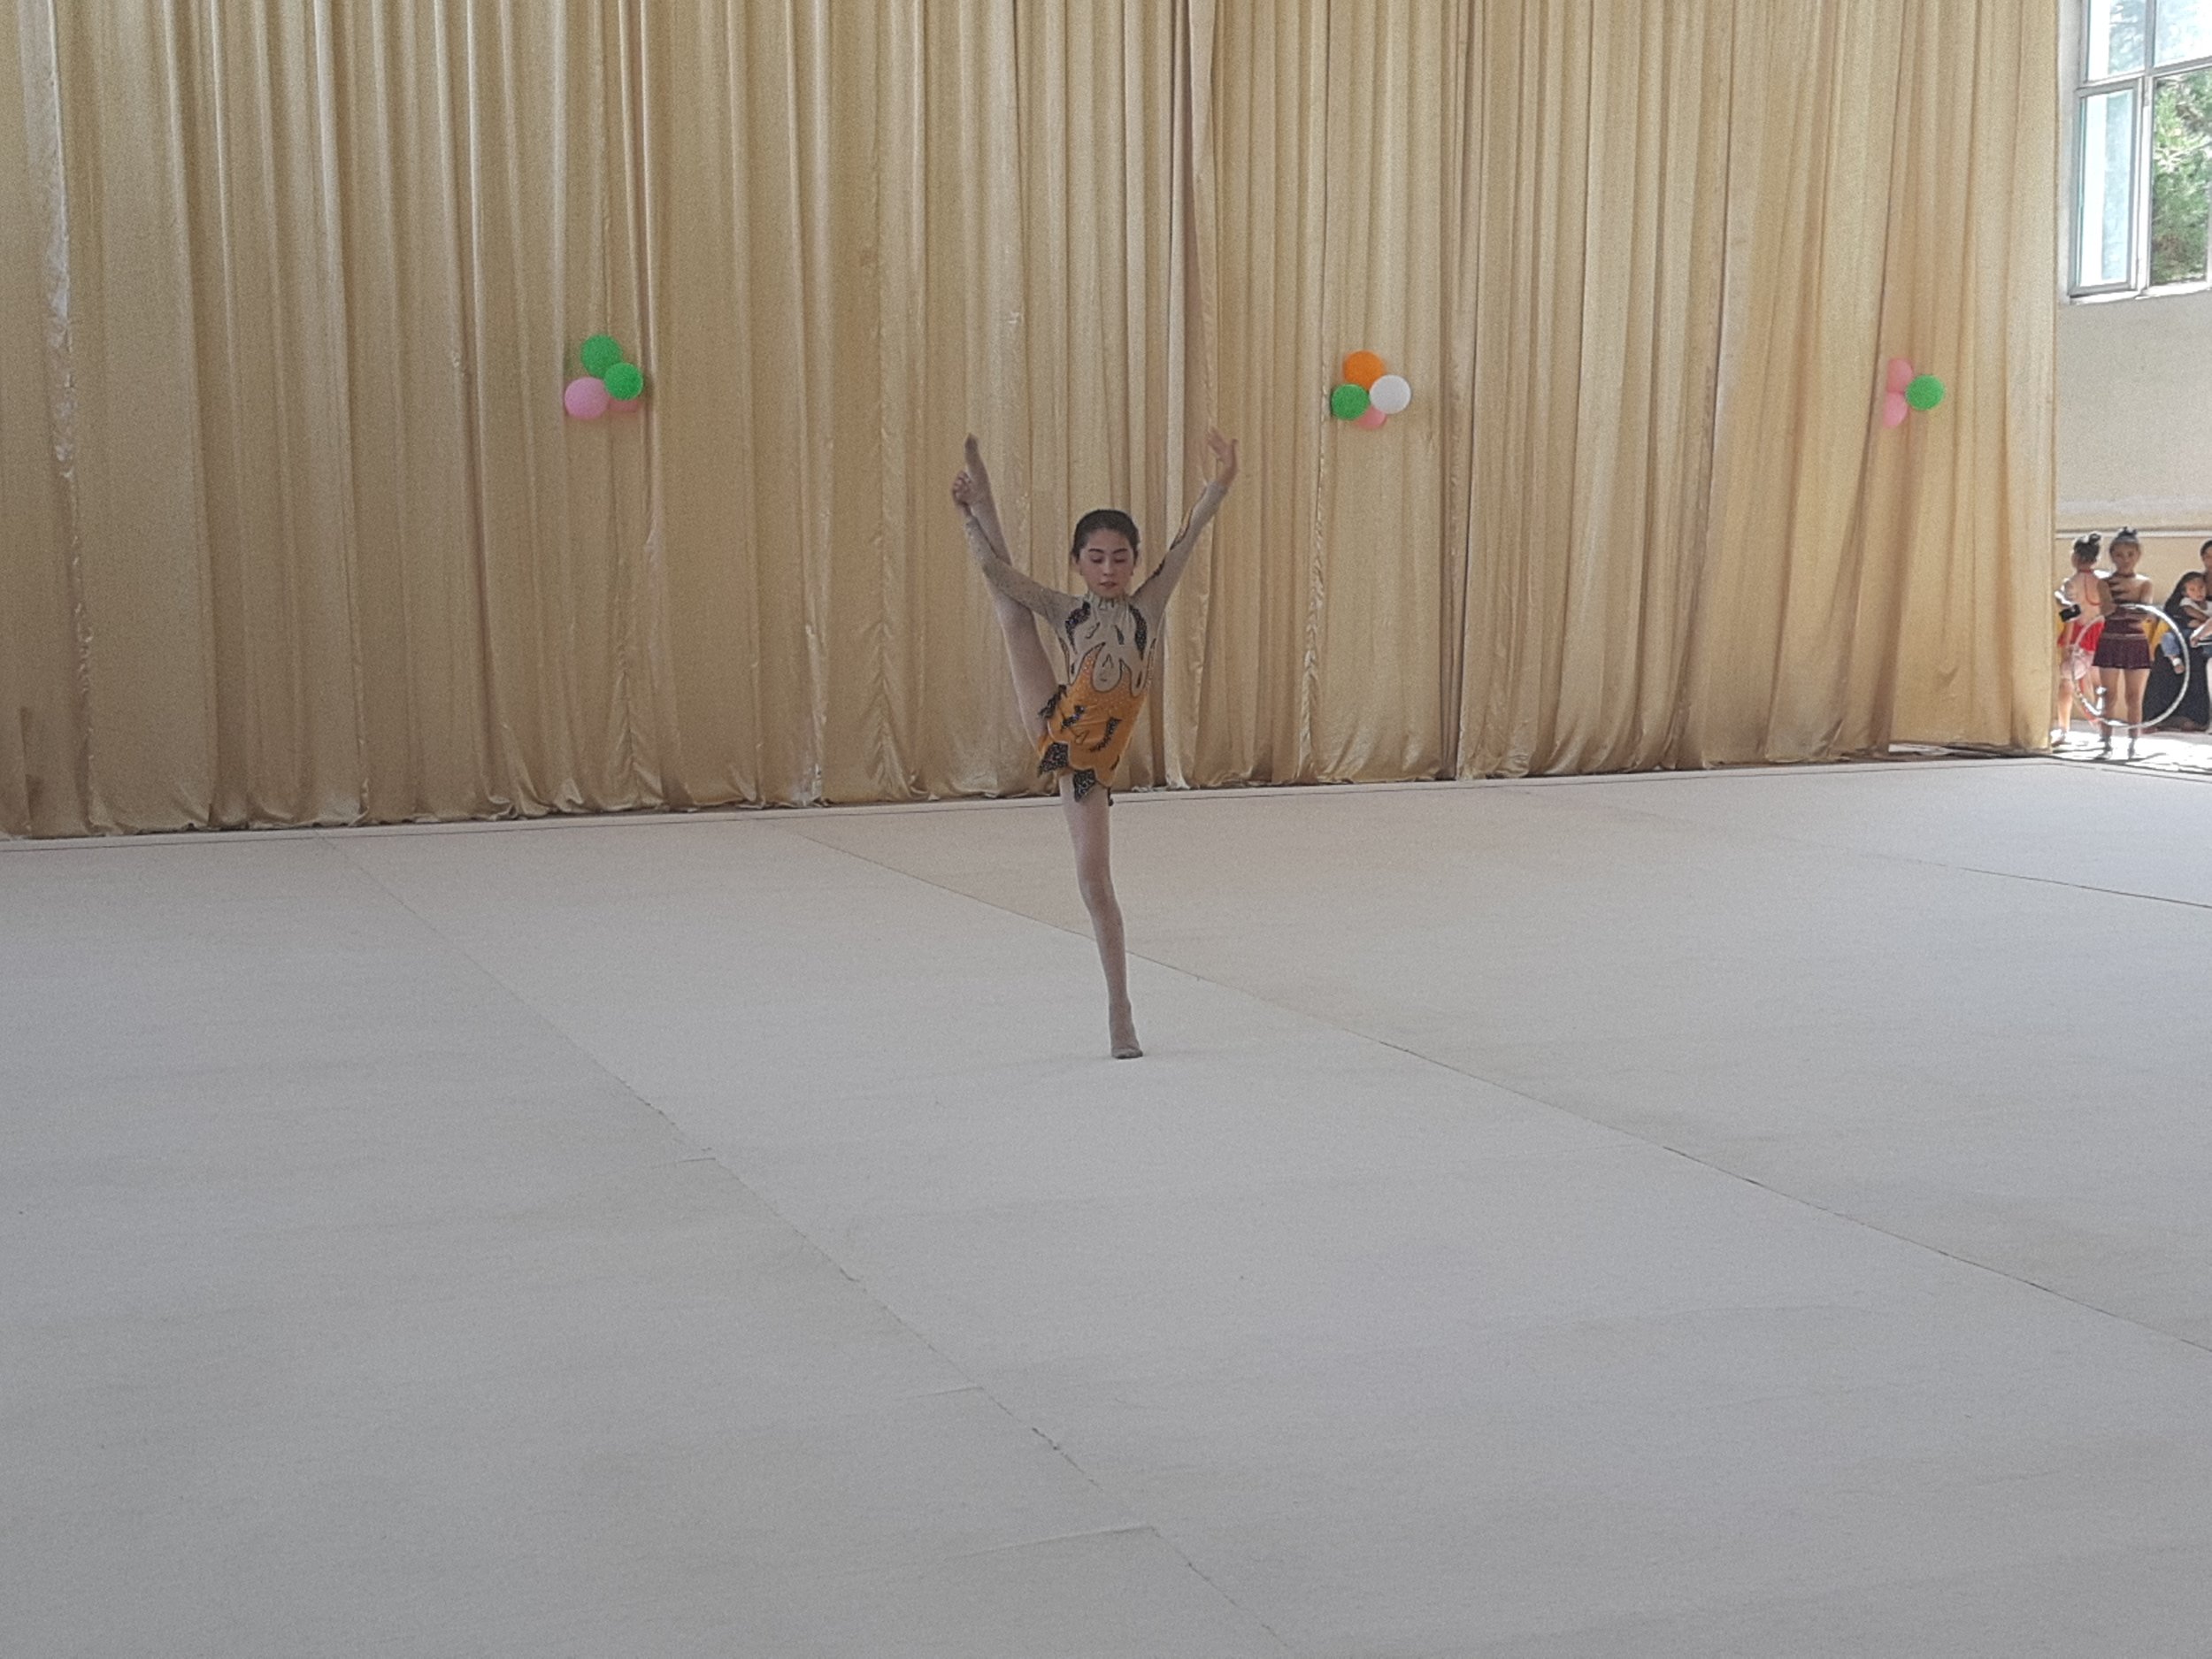 Ўзбекистон Республикаси Давлат Мустақиллигининг 28 йилигига бағишлаб спортнинг бадиий гимнастика тур